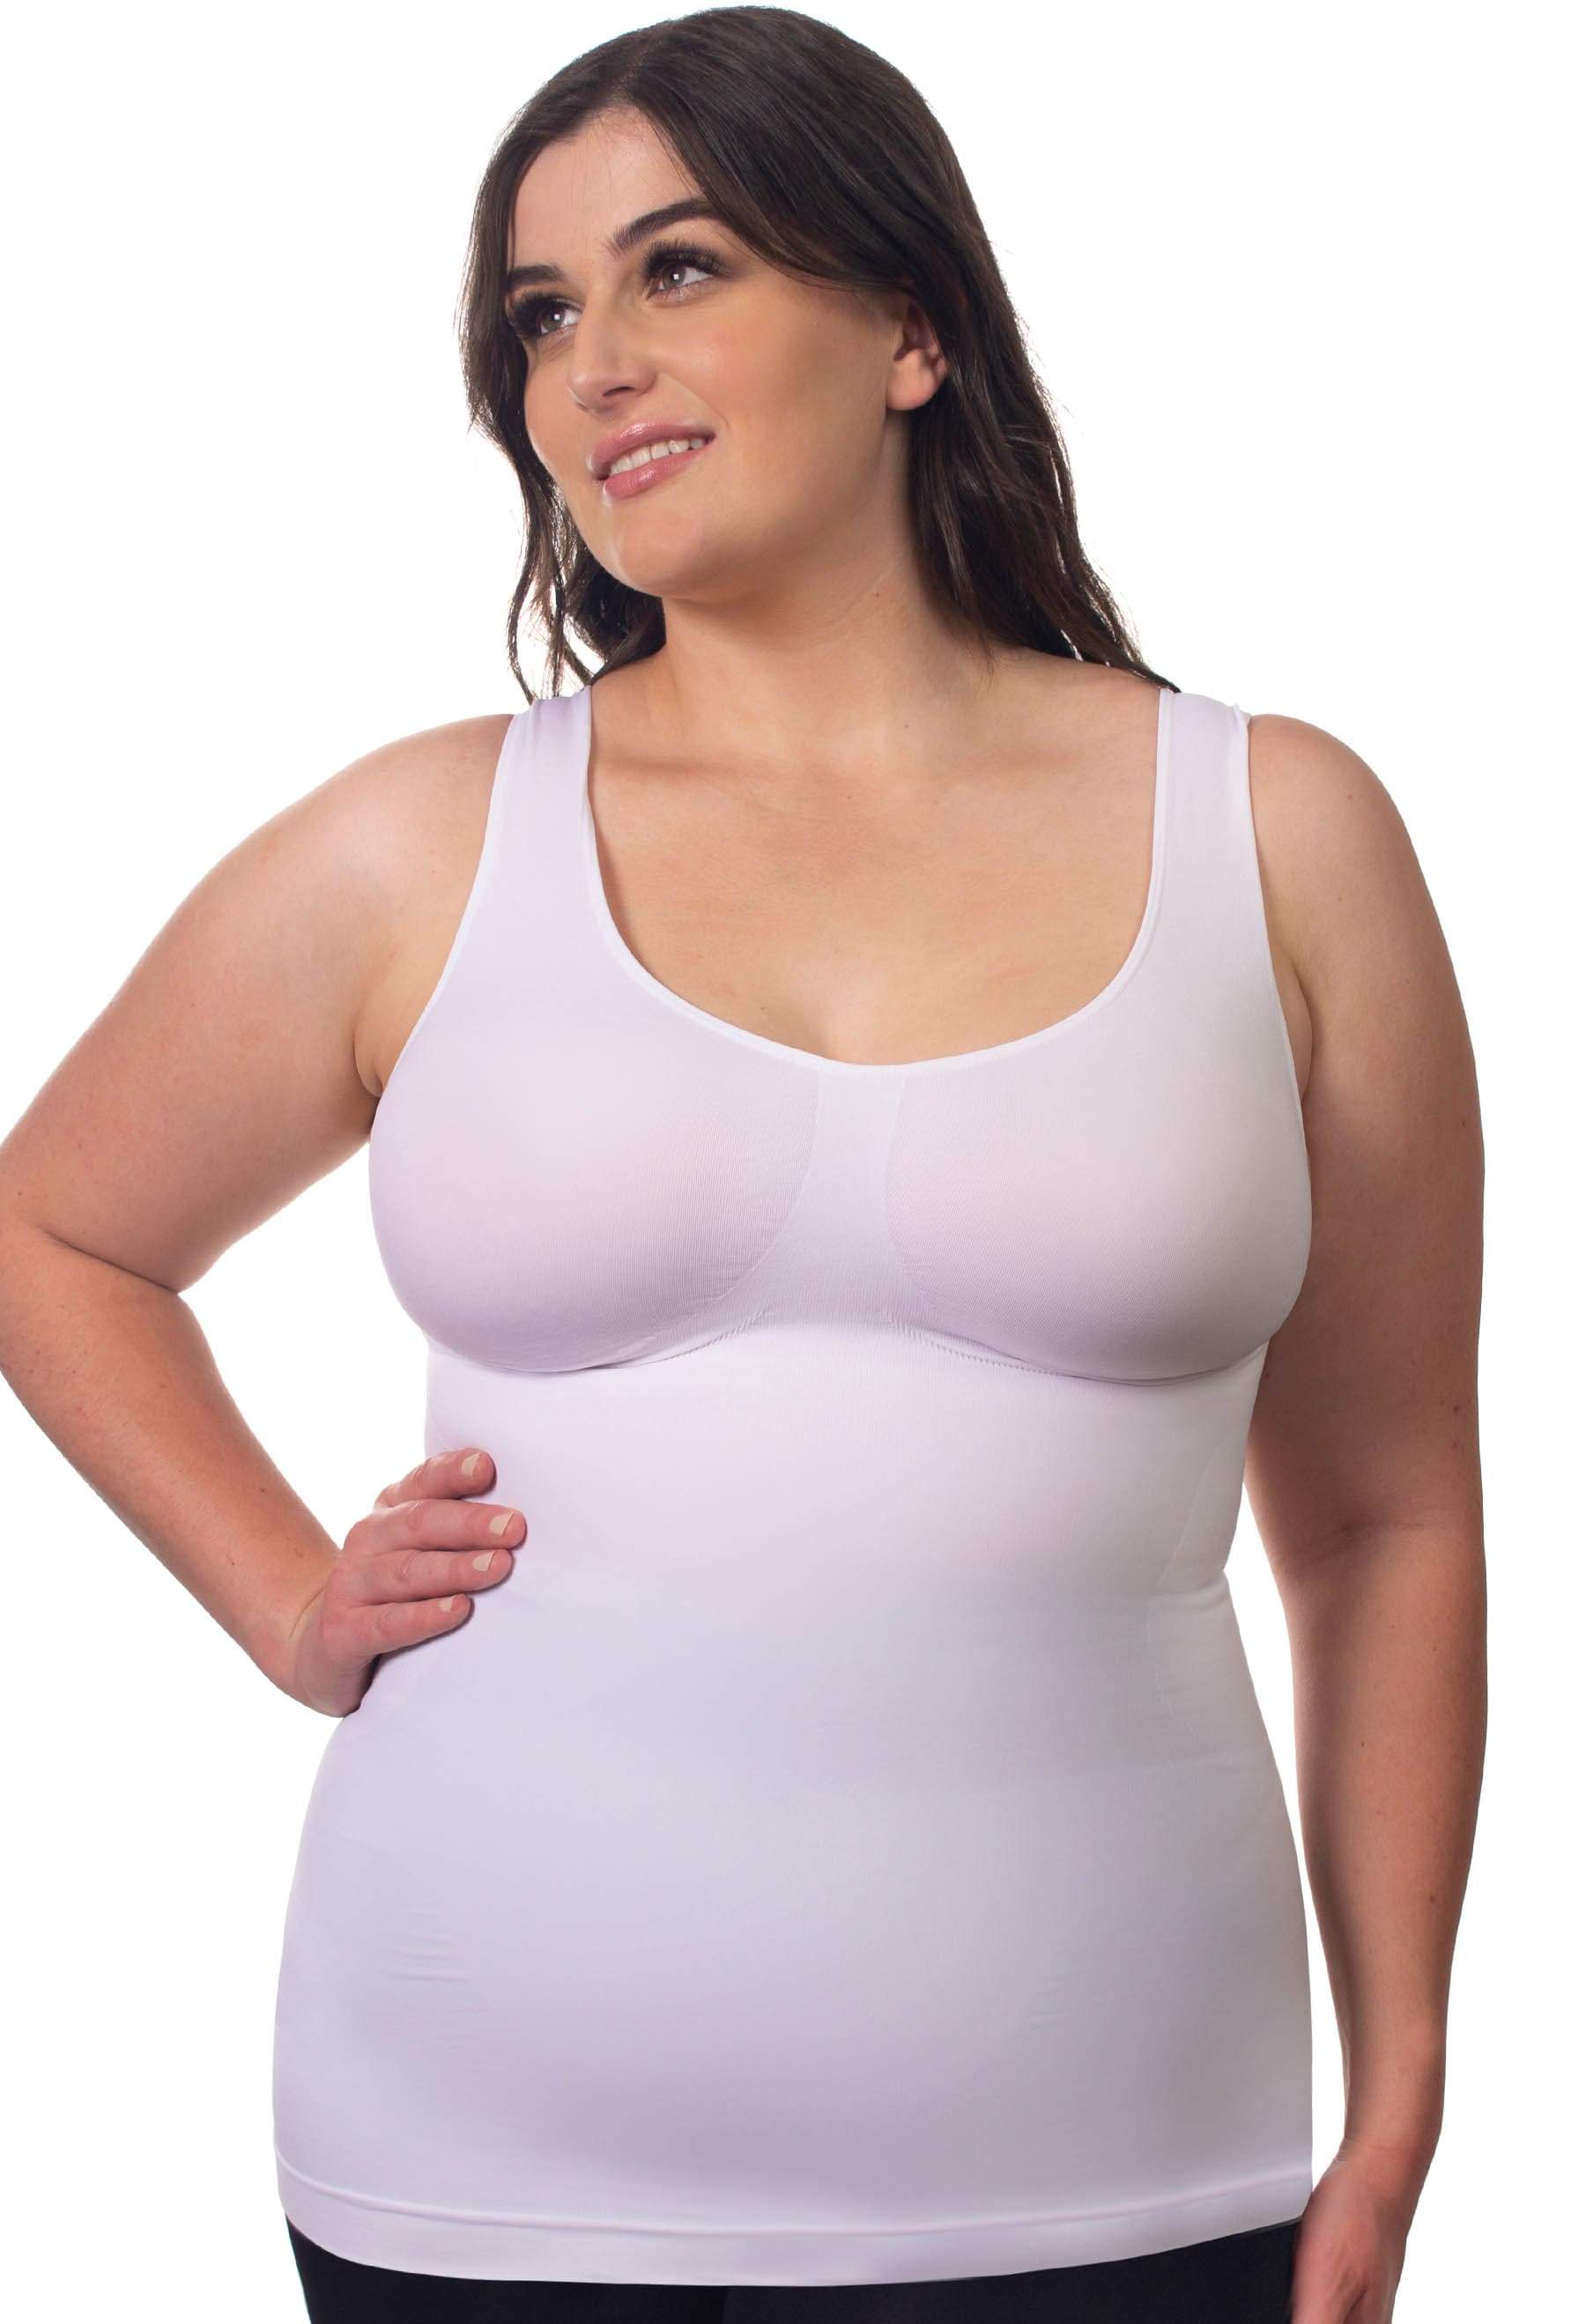 Women's Magic Bra Shaper Vest Breast Support (Large / 8-10, Black)